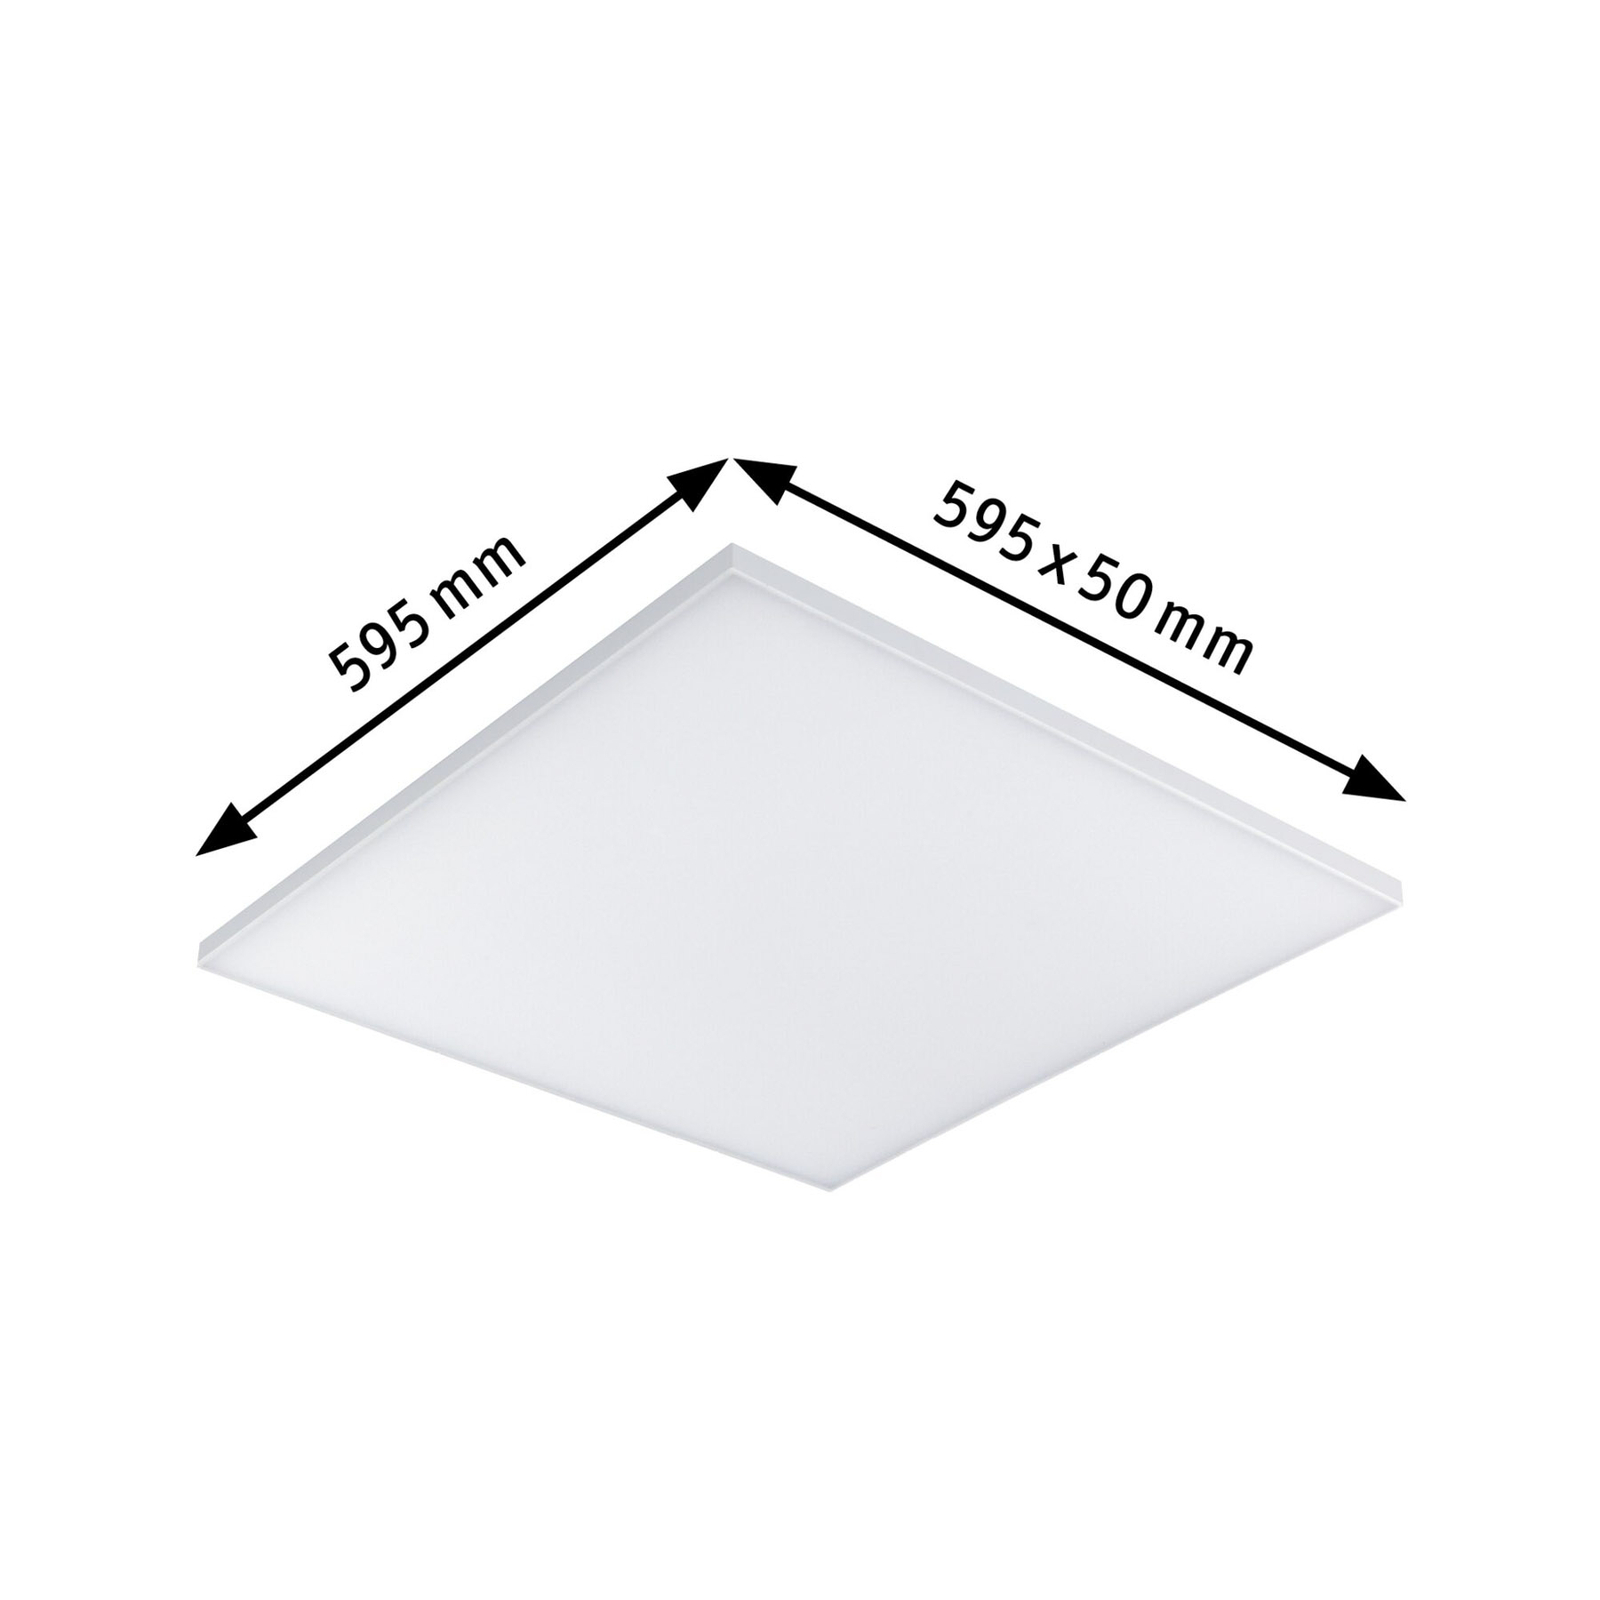 Панел Paulmann Velora LED с 3-степенно затъмняване, 59,5x59,5 cm